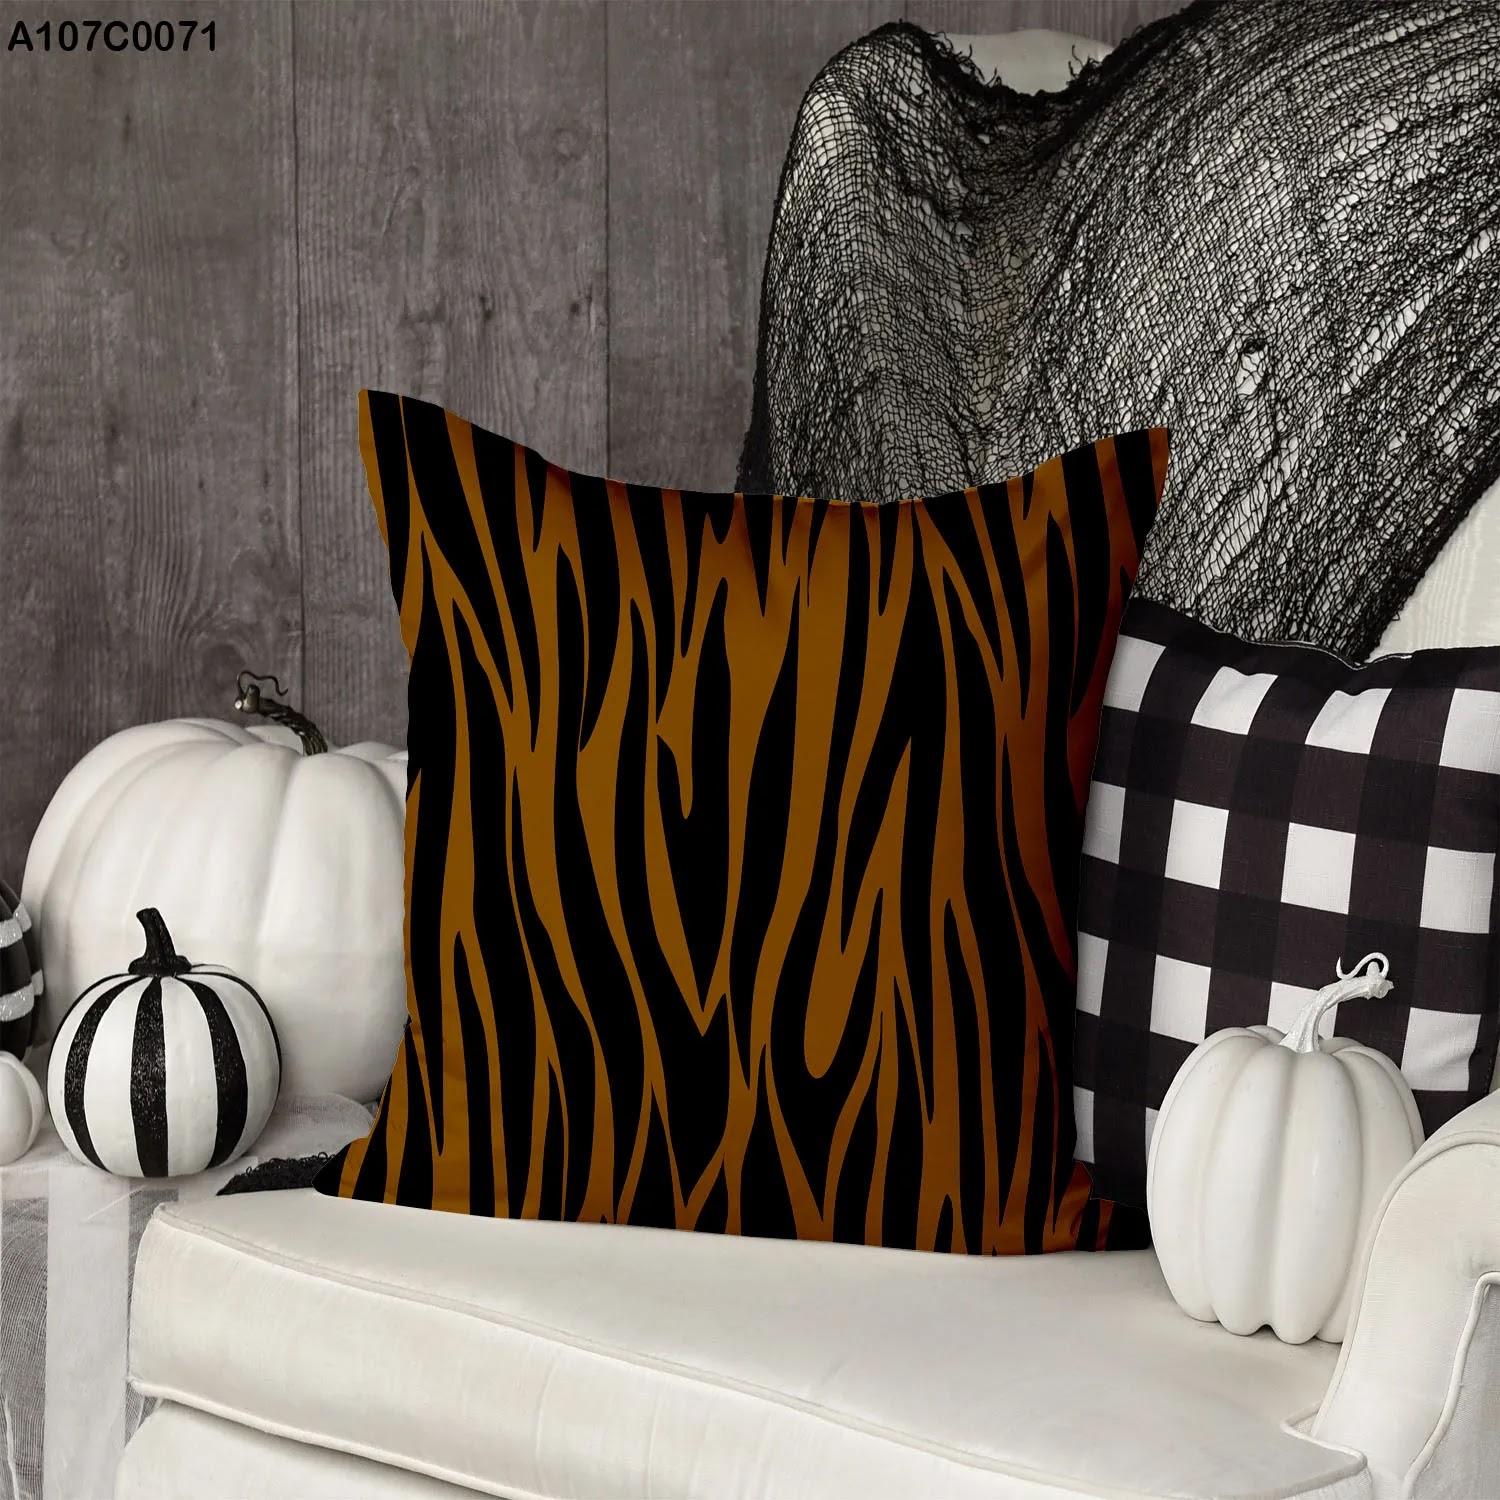 Pillow case with brown & black tiger skin pattern